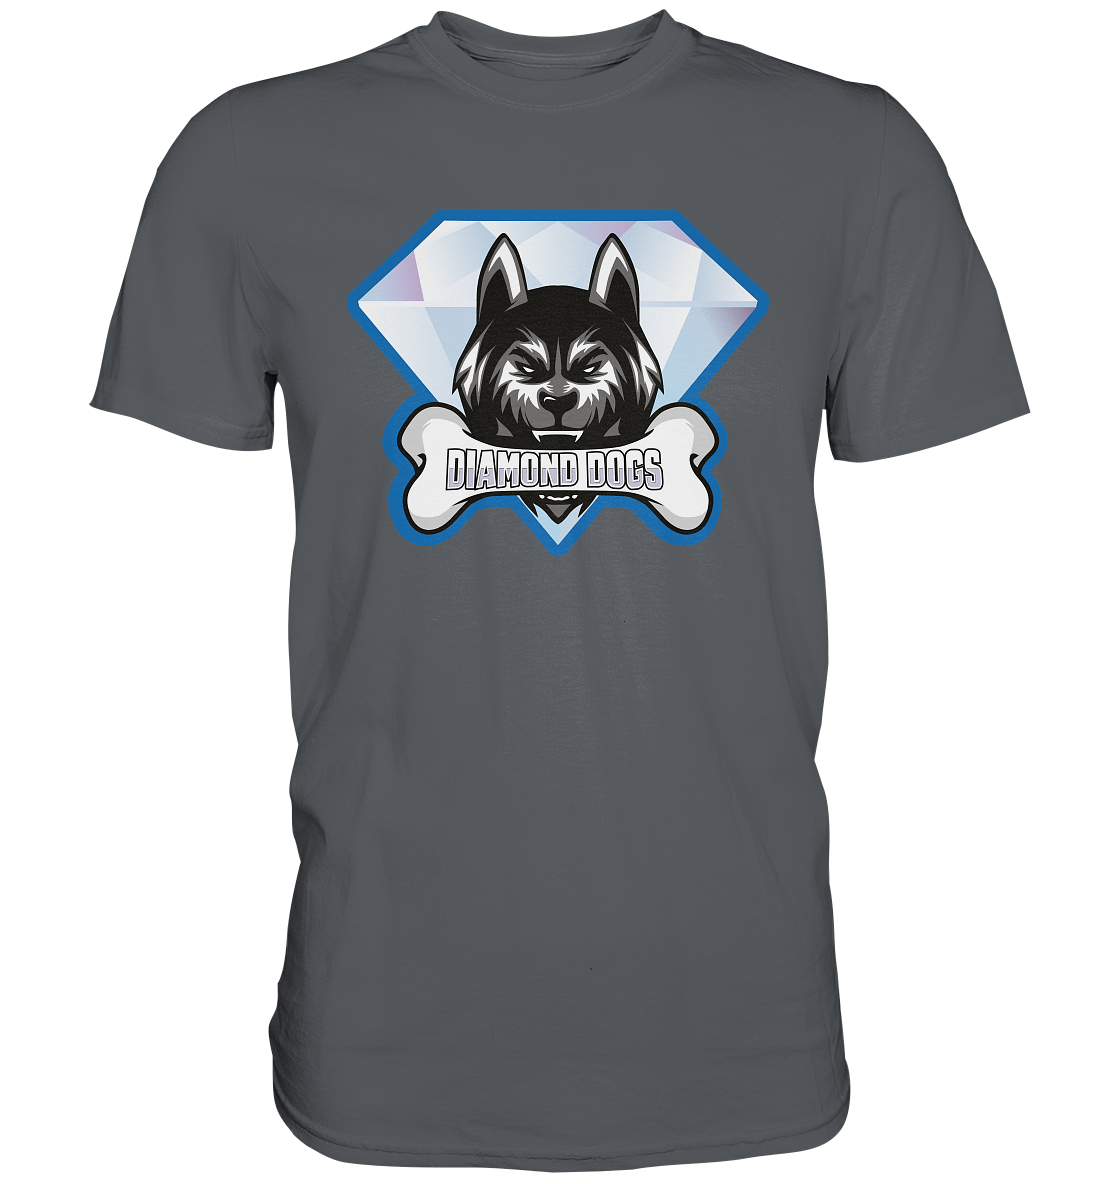 DIAMOND DOGS - Basic Shirt